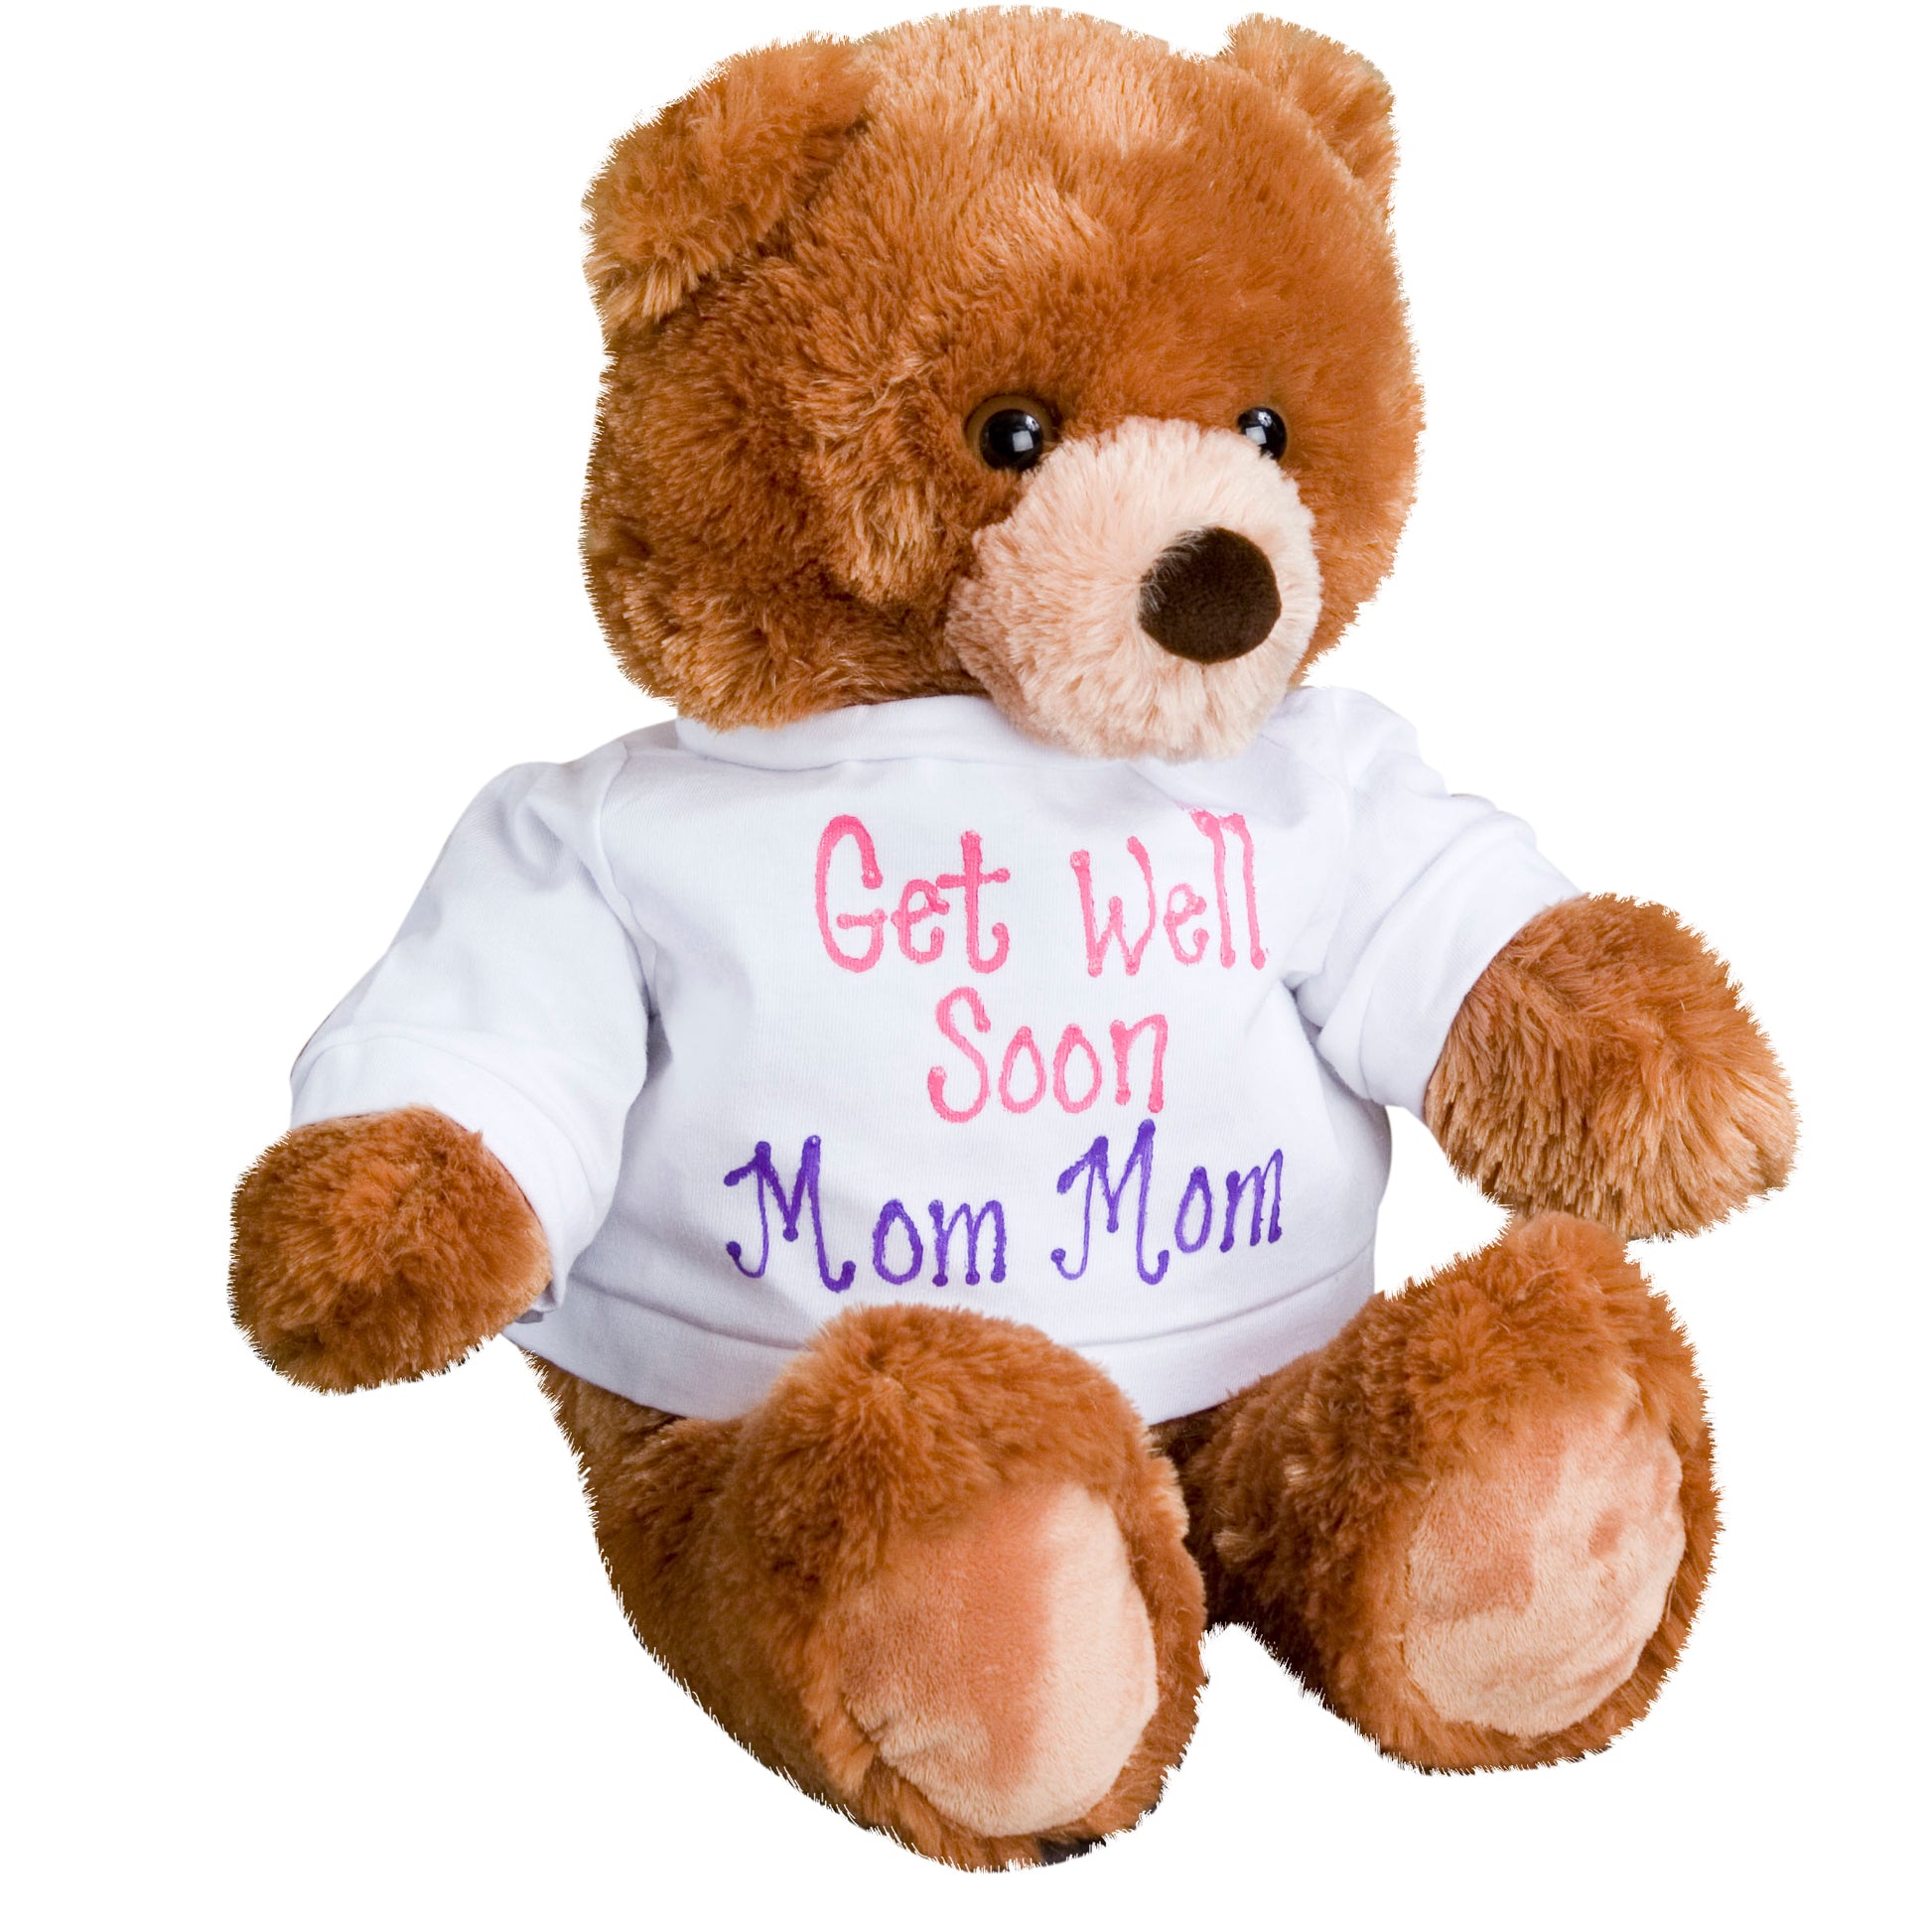 Plush Teddy Bear in Personalized T-shirt